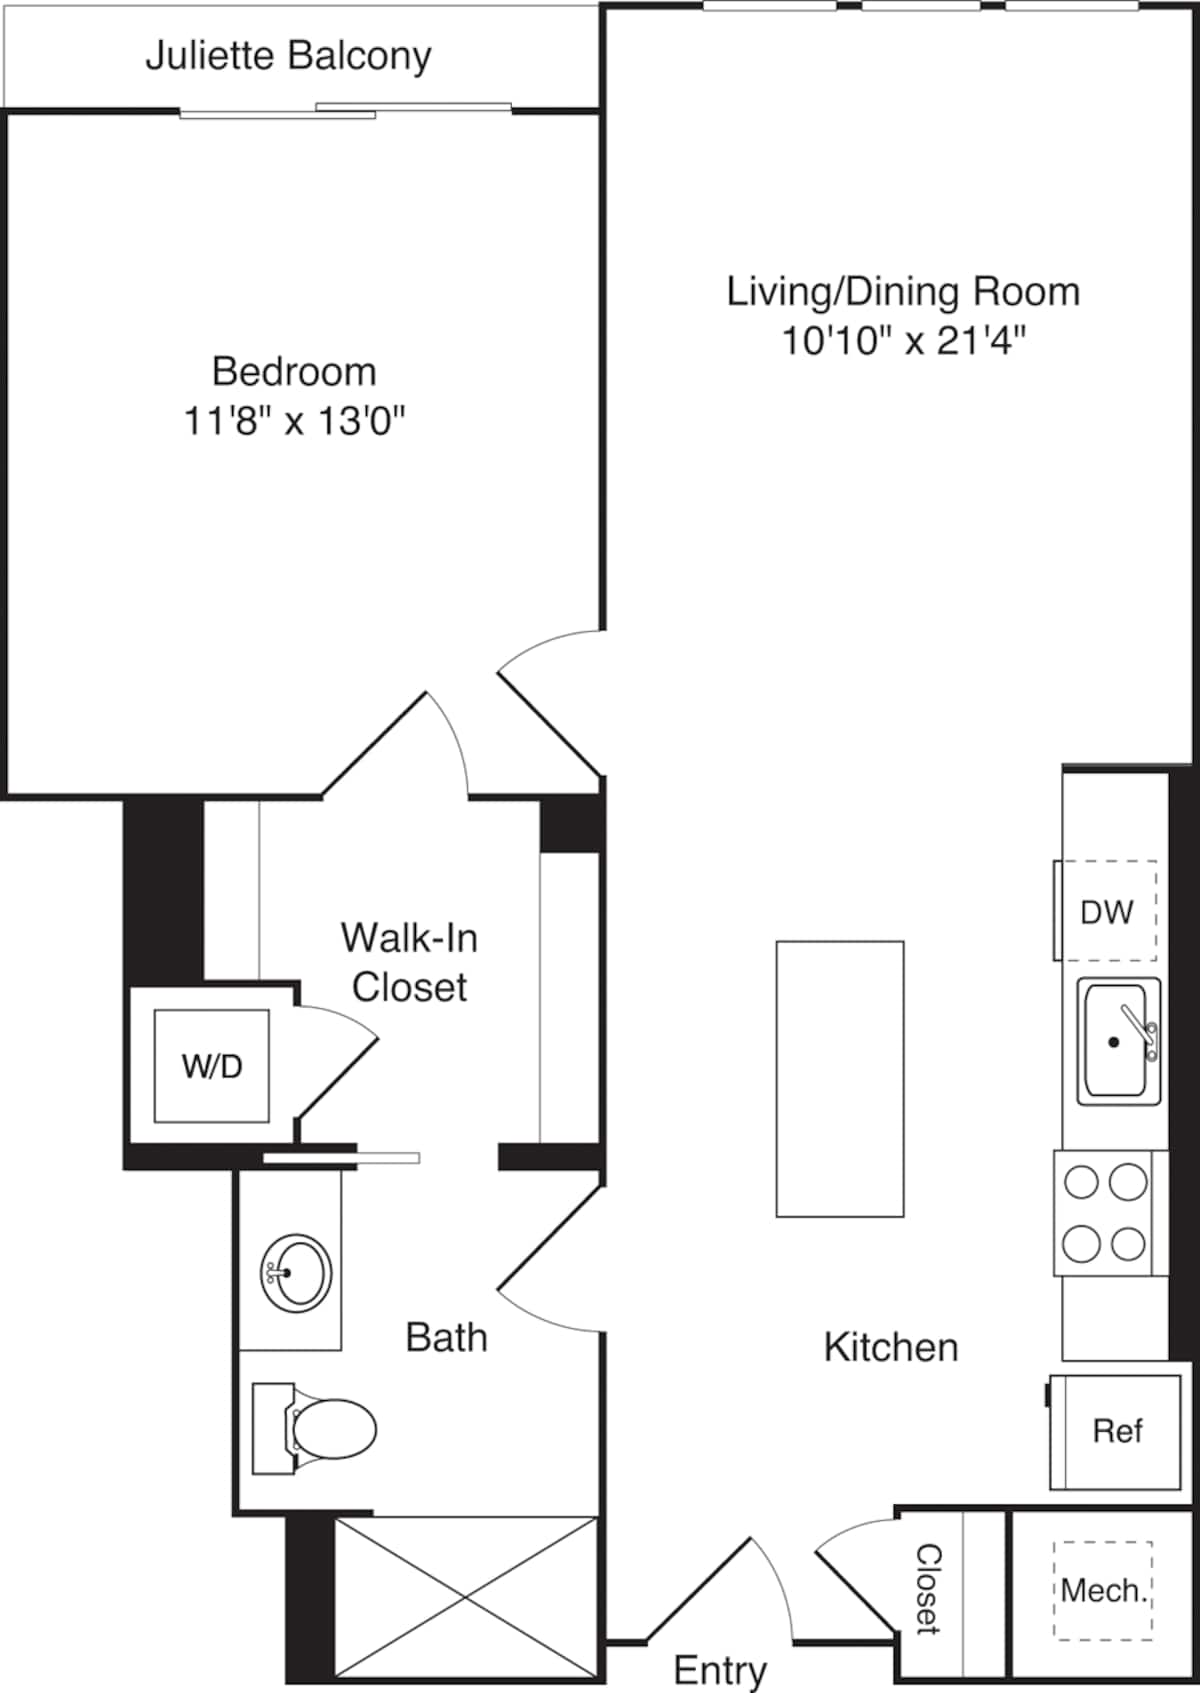 Floorplan diagram for A03-1, showing 1 bedroom